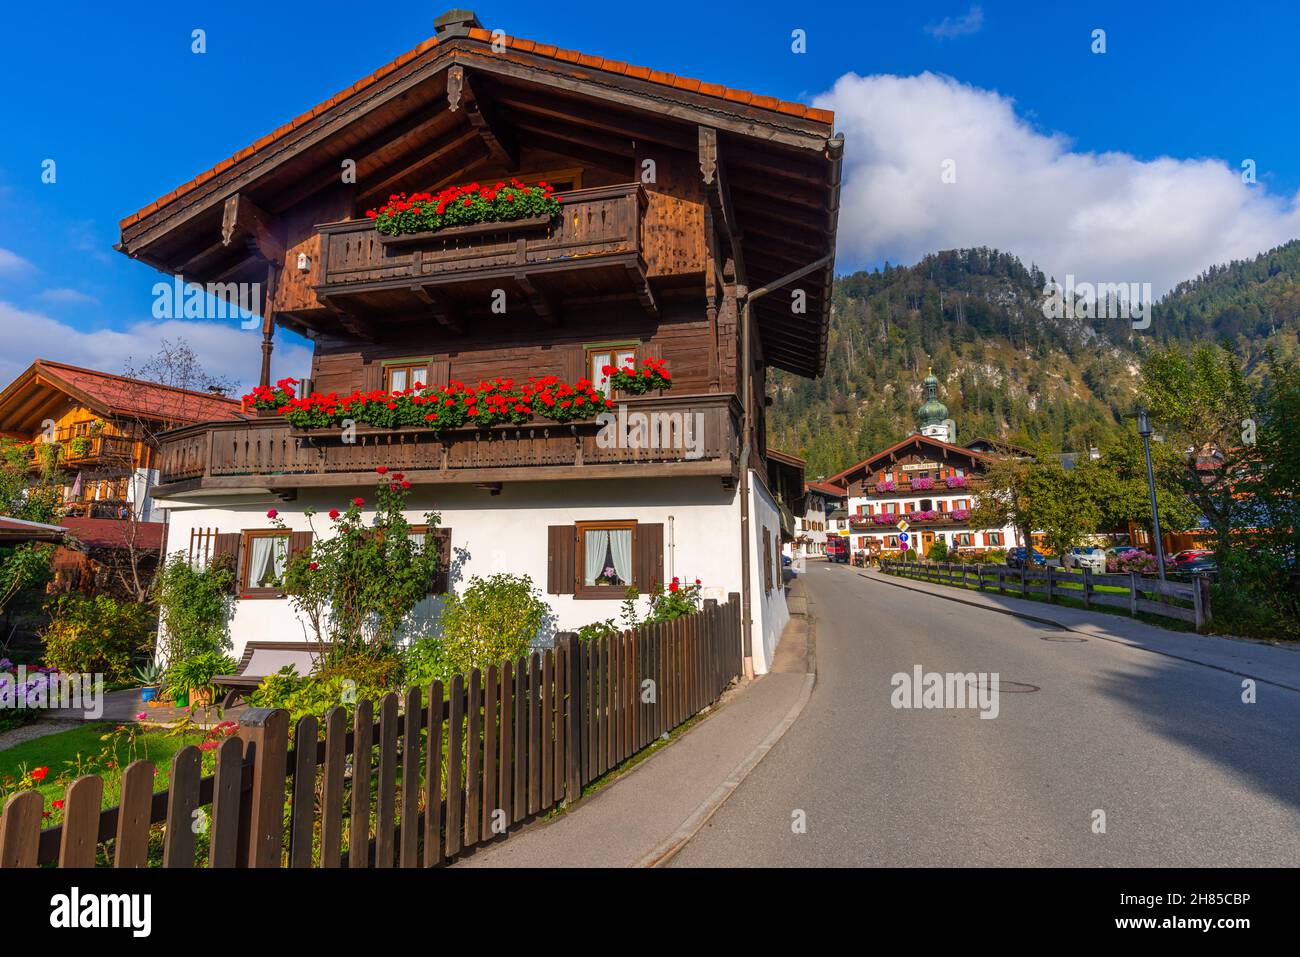 La cittadina di Reit im Winkl con le sue tipiche case bavaresi, Reit im Winkl, regione di Chiemgau, Baviera, Alpi bavaresi, Germania meridionale, Europa Foto Stock